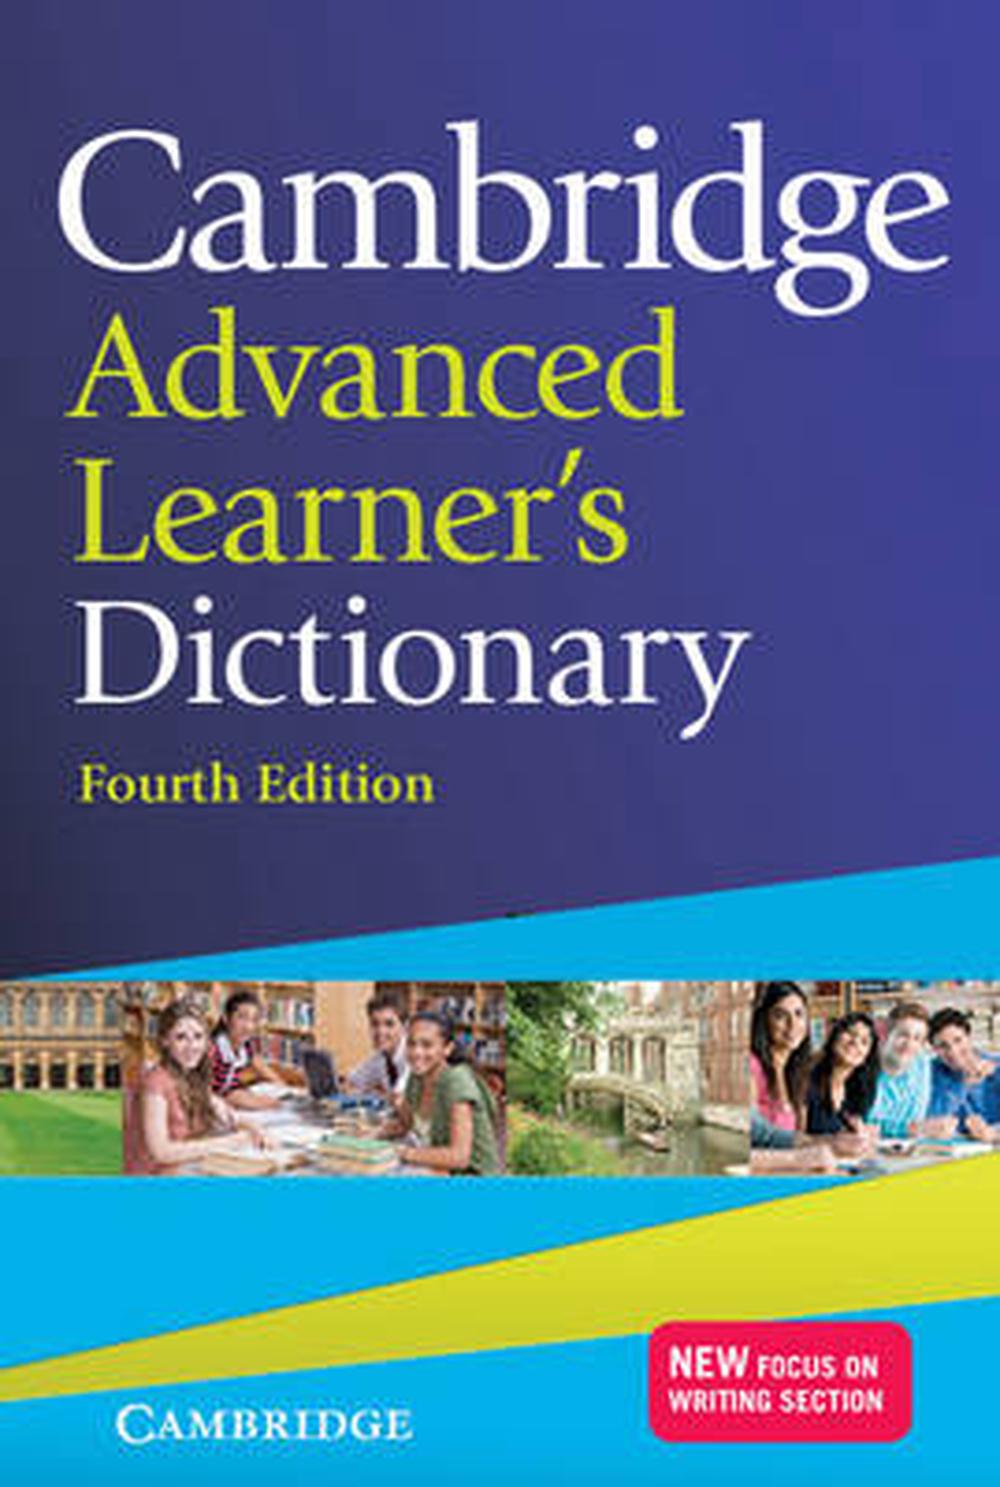 education cambridge dictionary